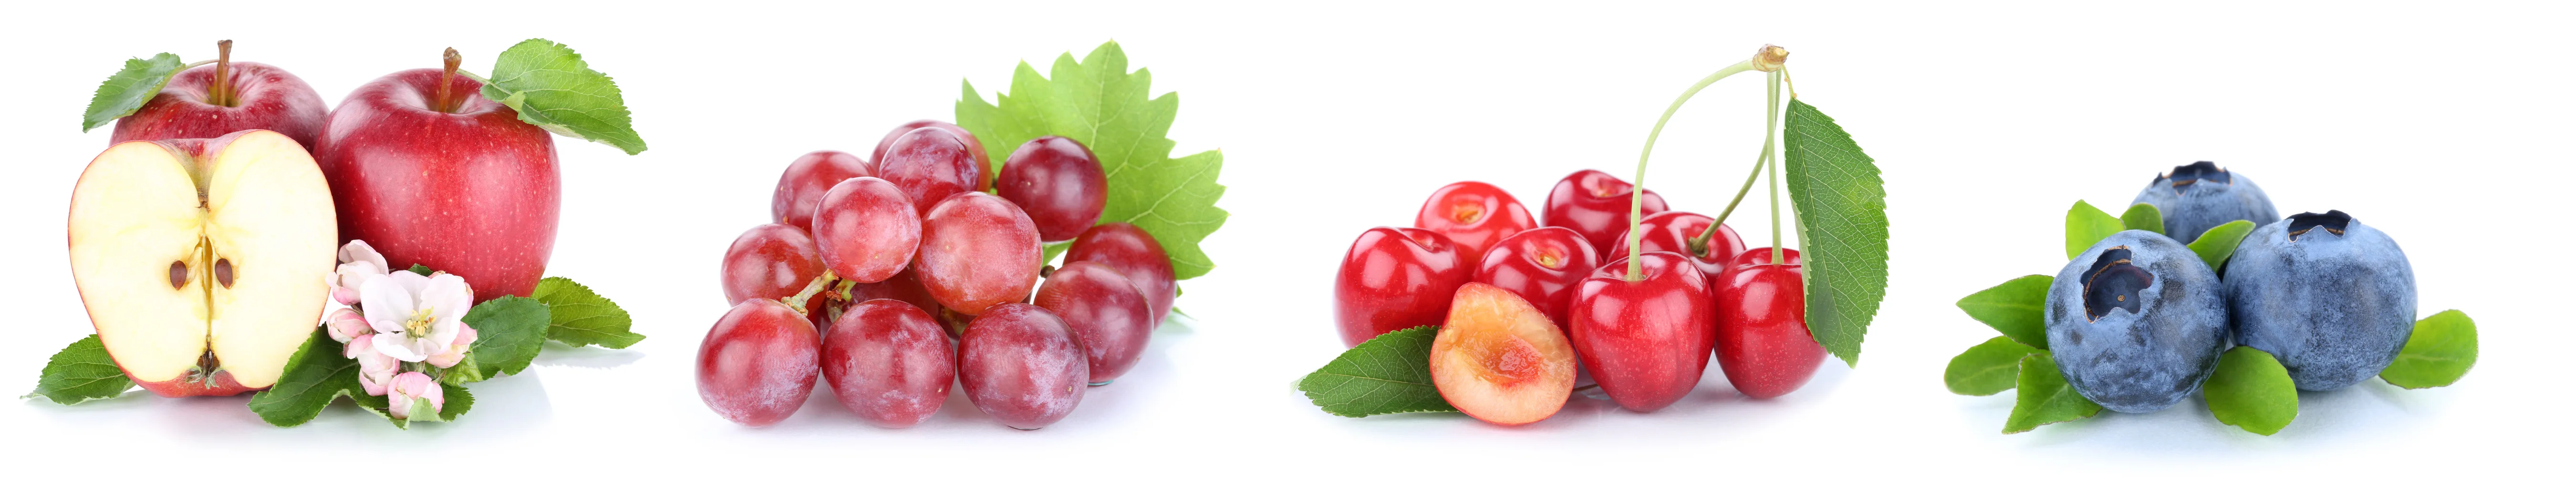 Fruit testing on apple, grape, cherry, blueberry